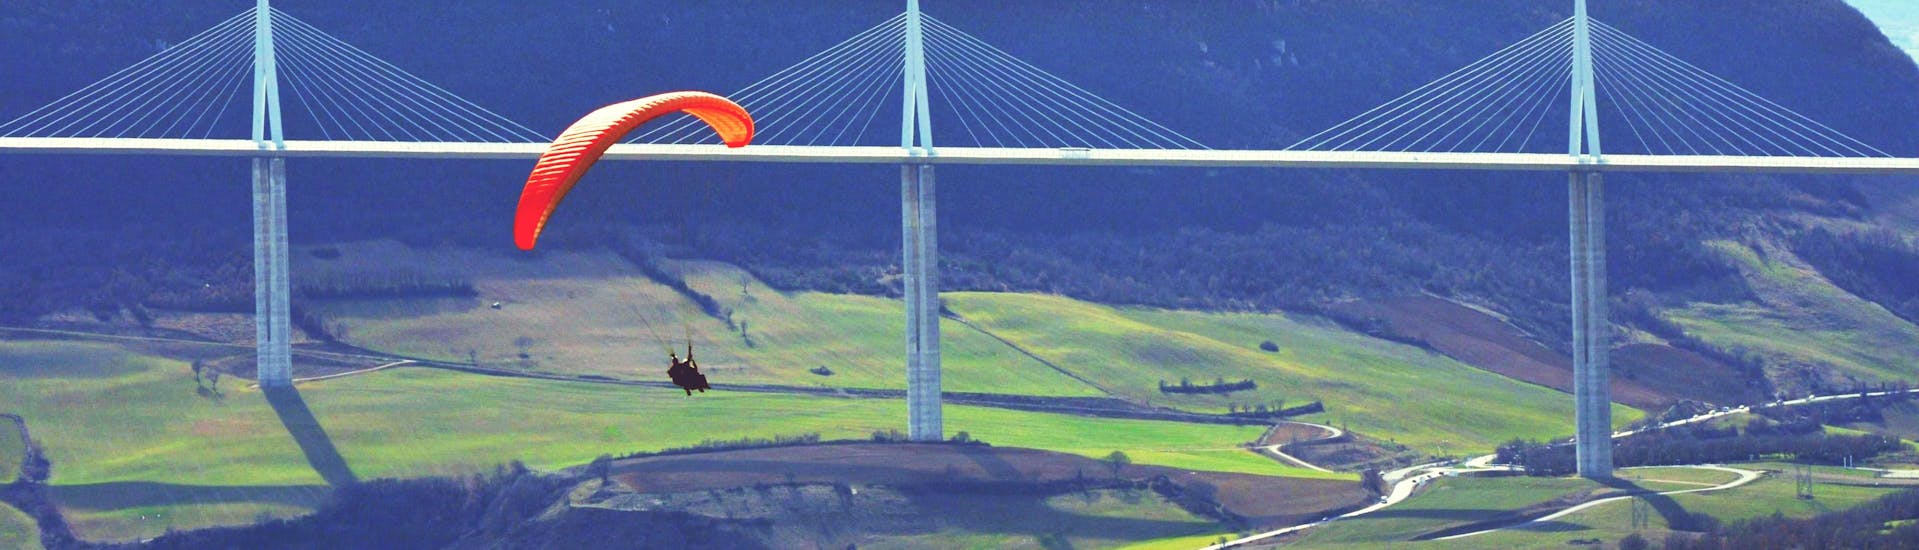 Volo acrobatico in parapendio biposto a Millau (da 12 anni) - Parc naturel régional des Grands Causses.